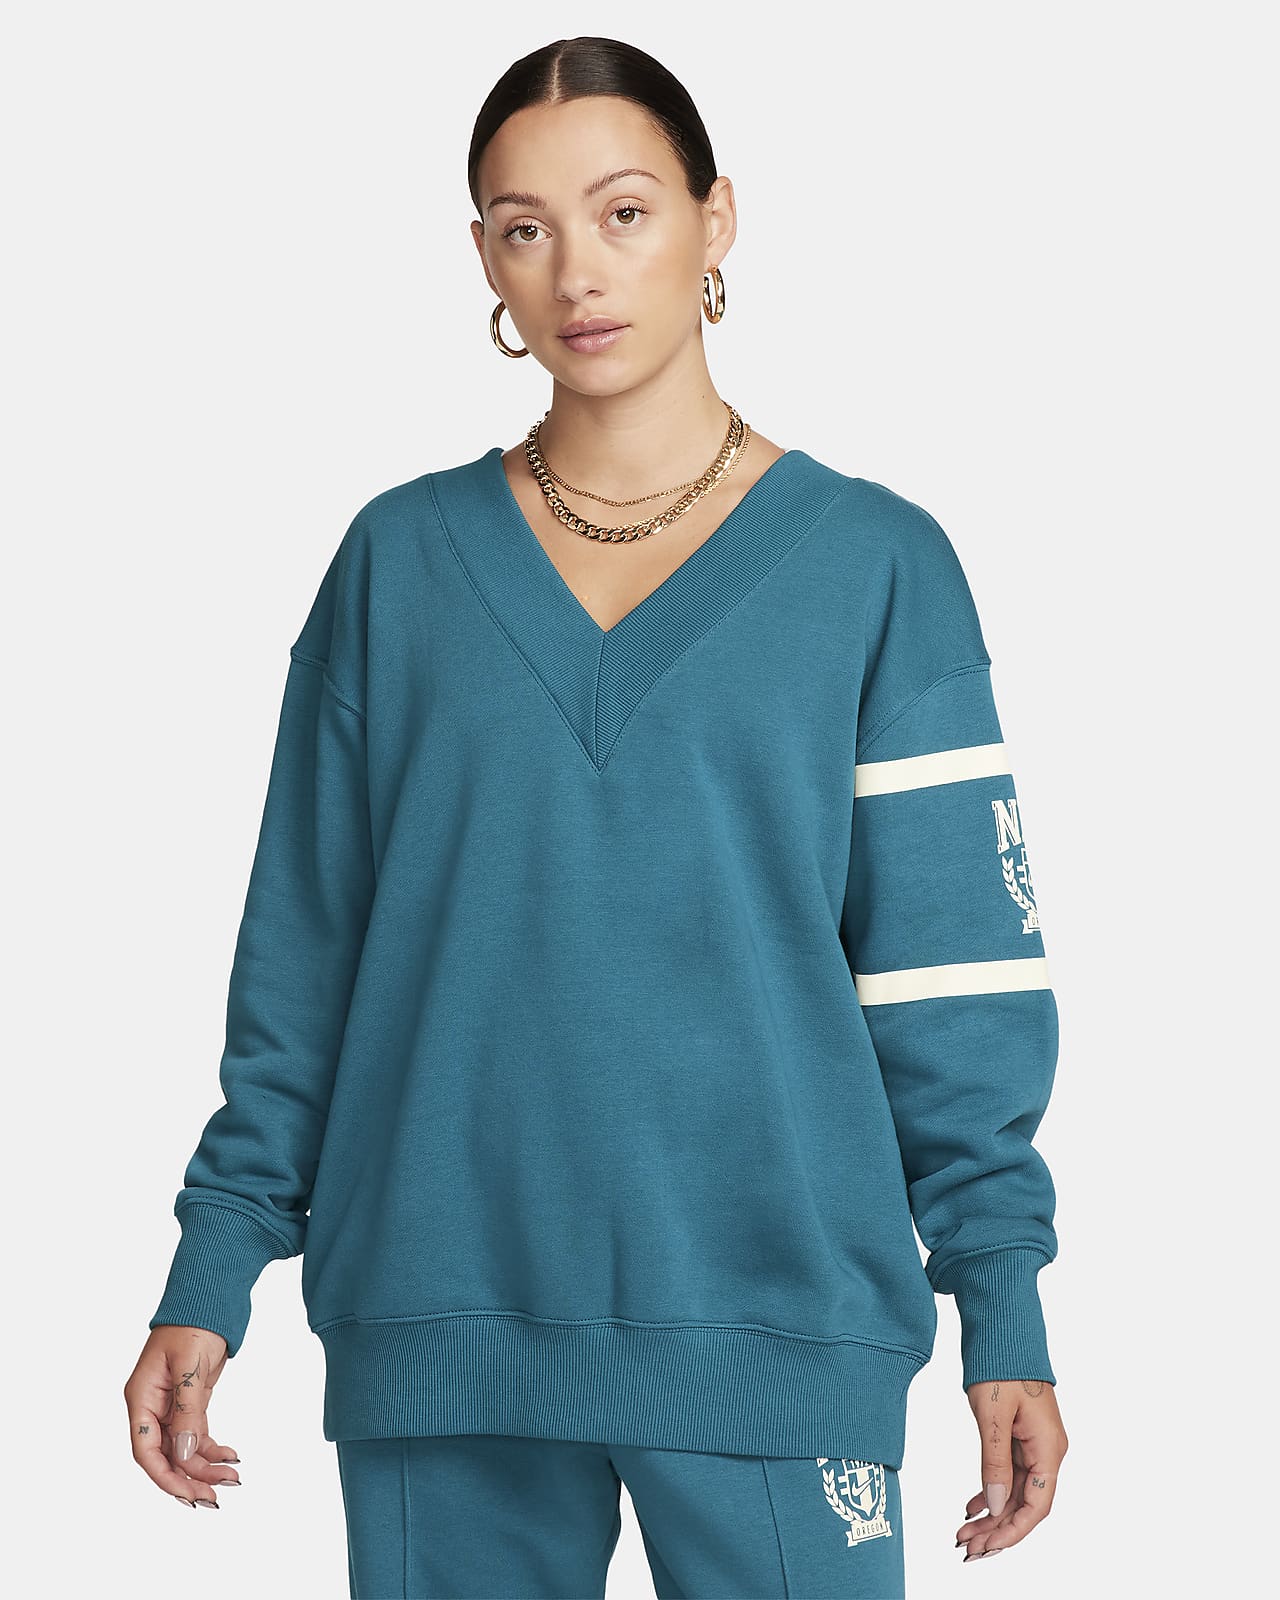 Nike Sportswear Phoenix Fleece Damen-Sweatshirt mit V-Ausschnitt